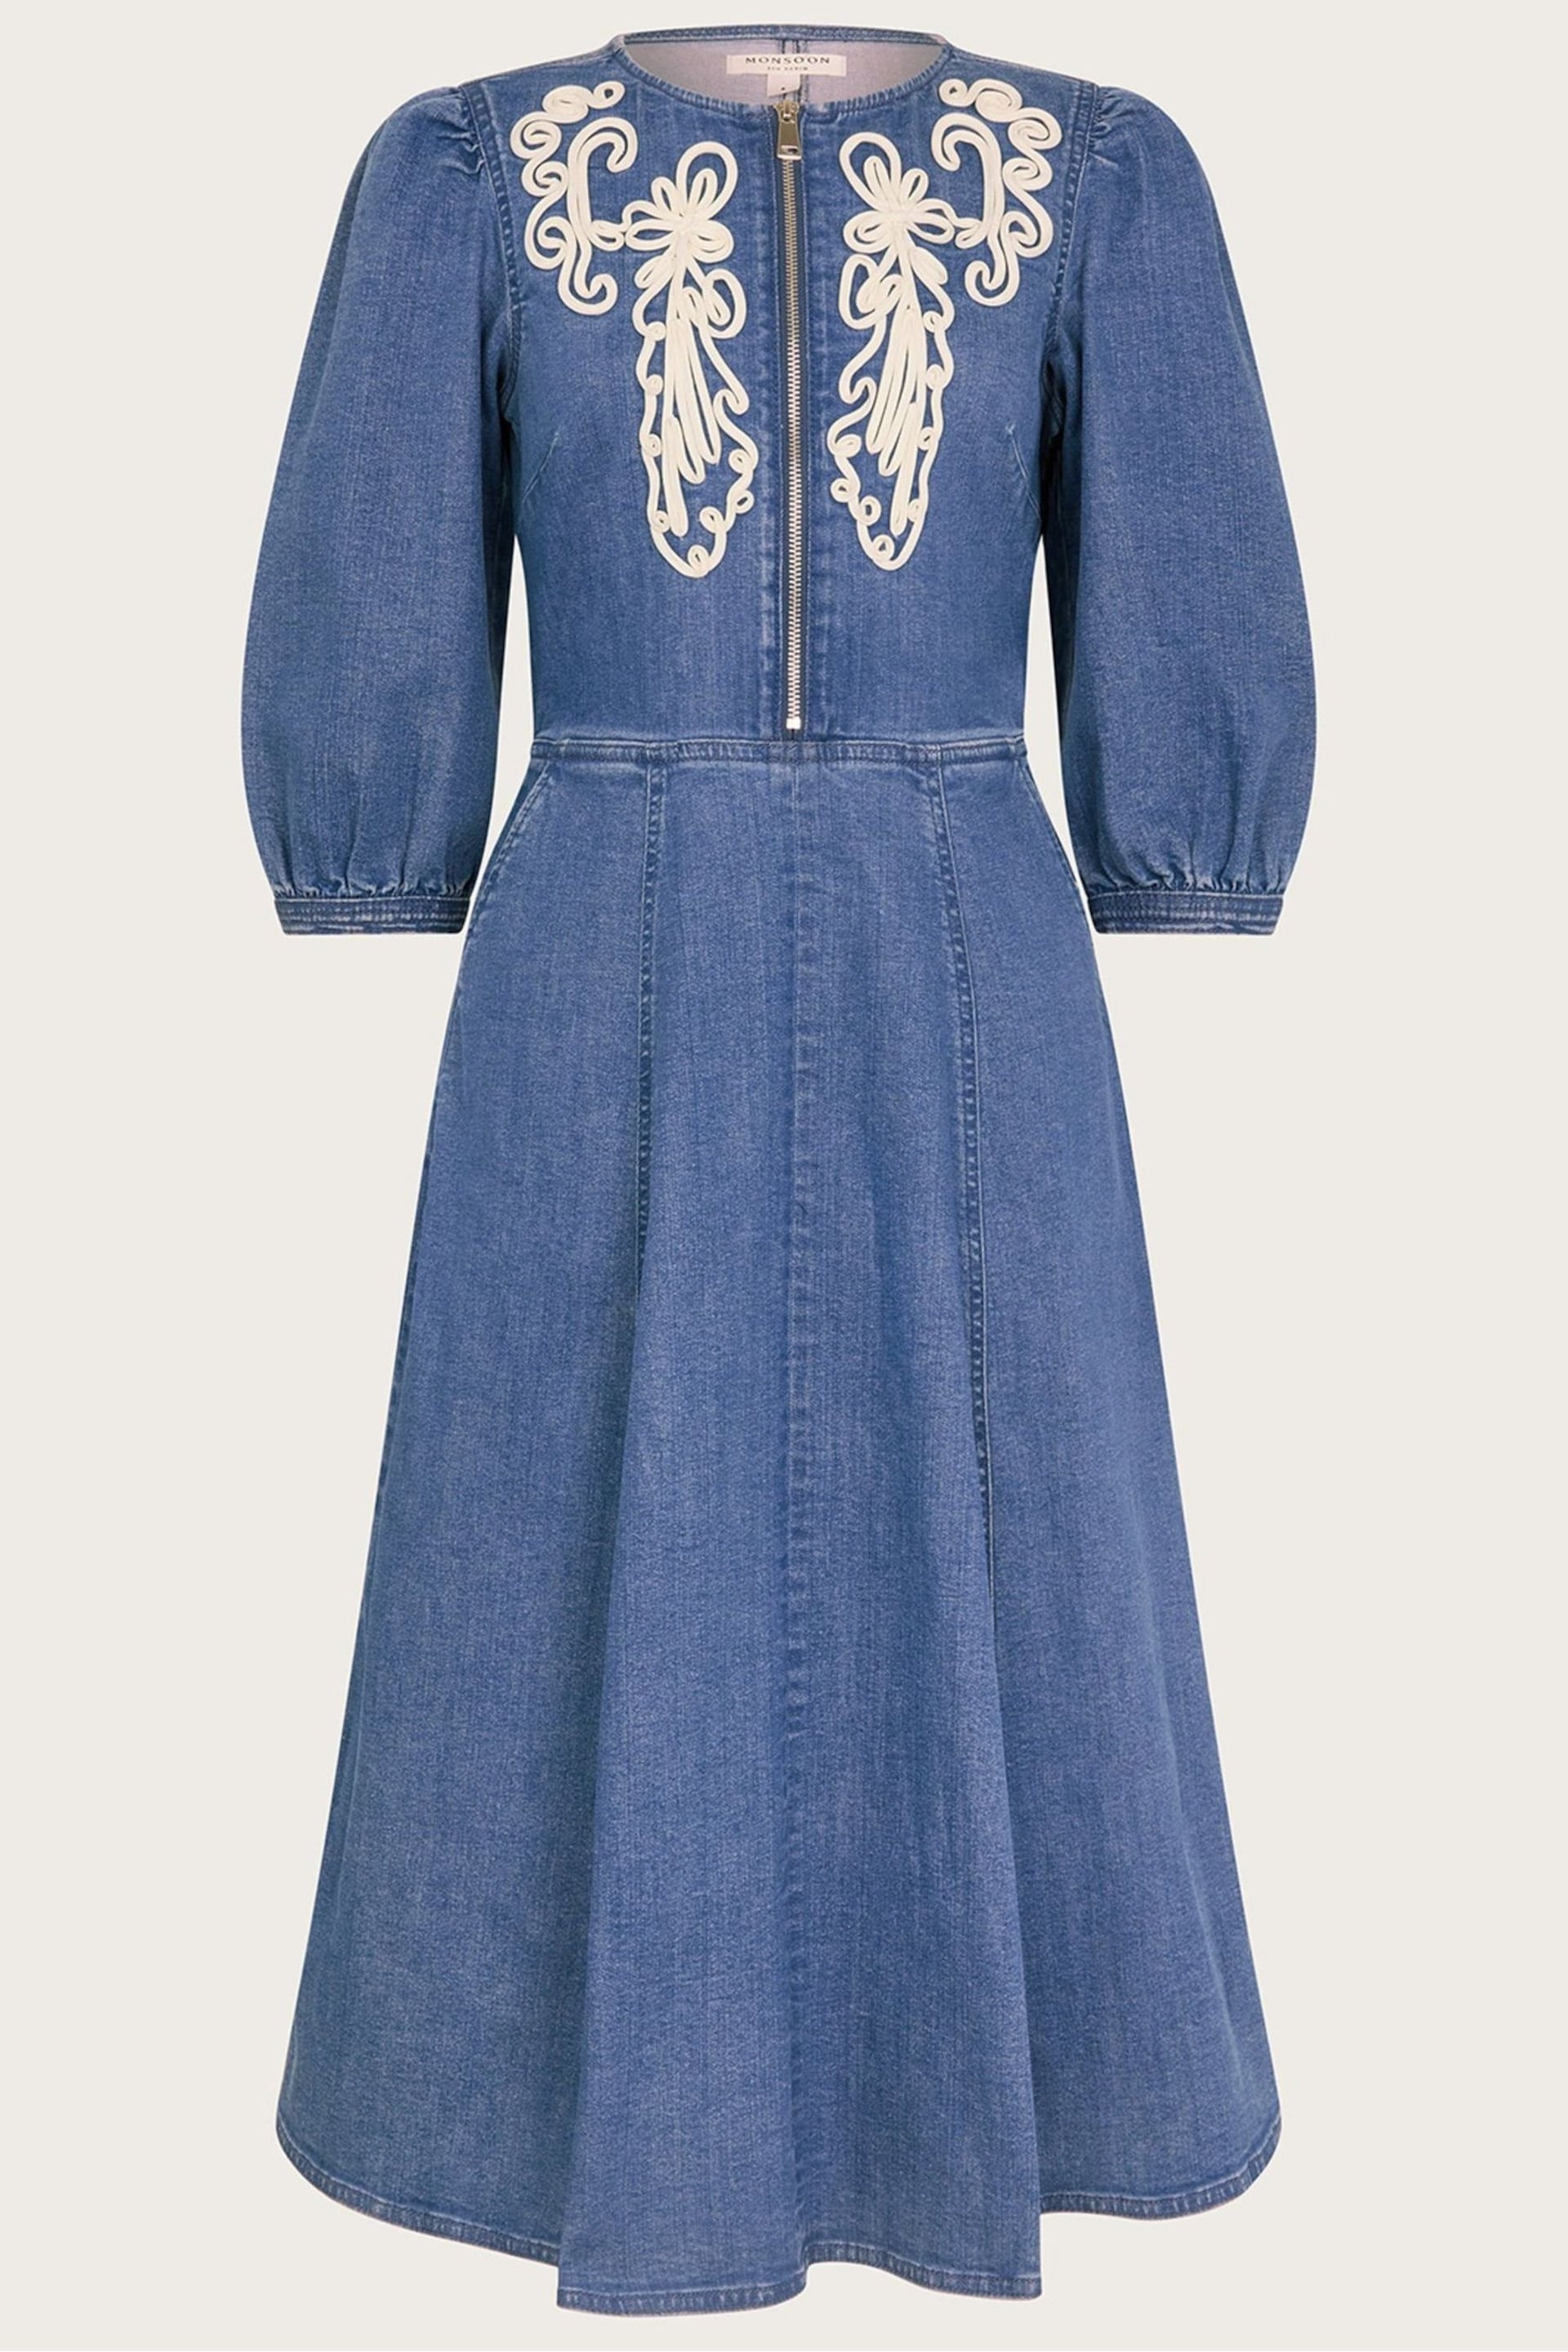 Monsoon Blue Kaia Cornelli Dress - Image 6 of 6